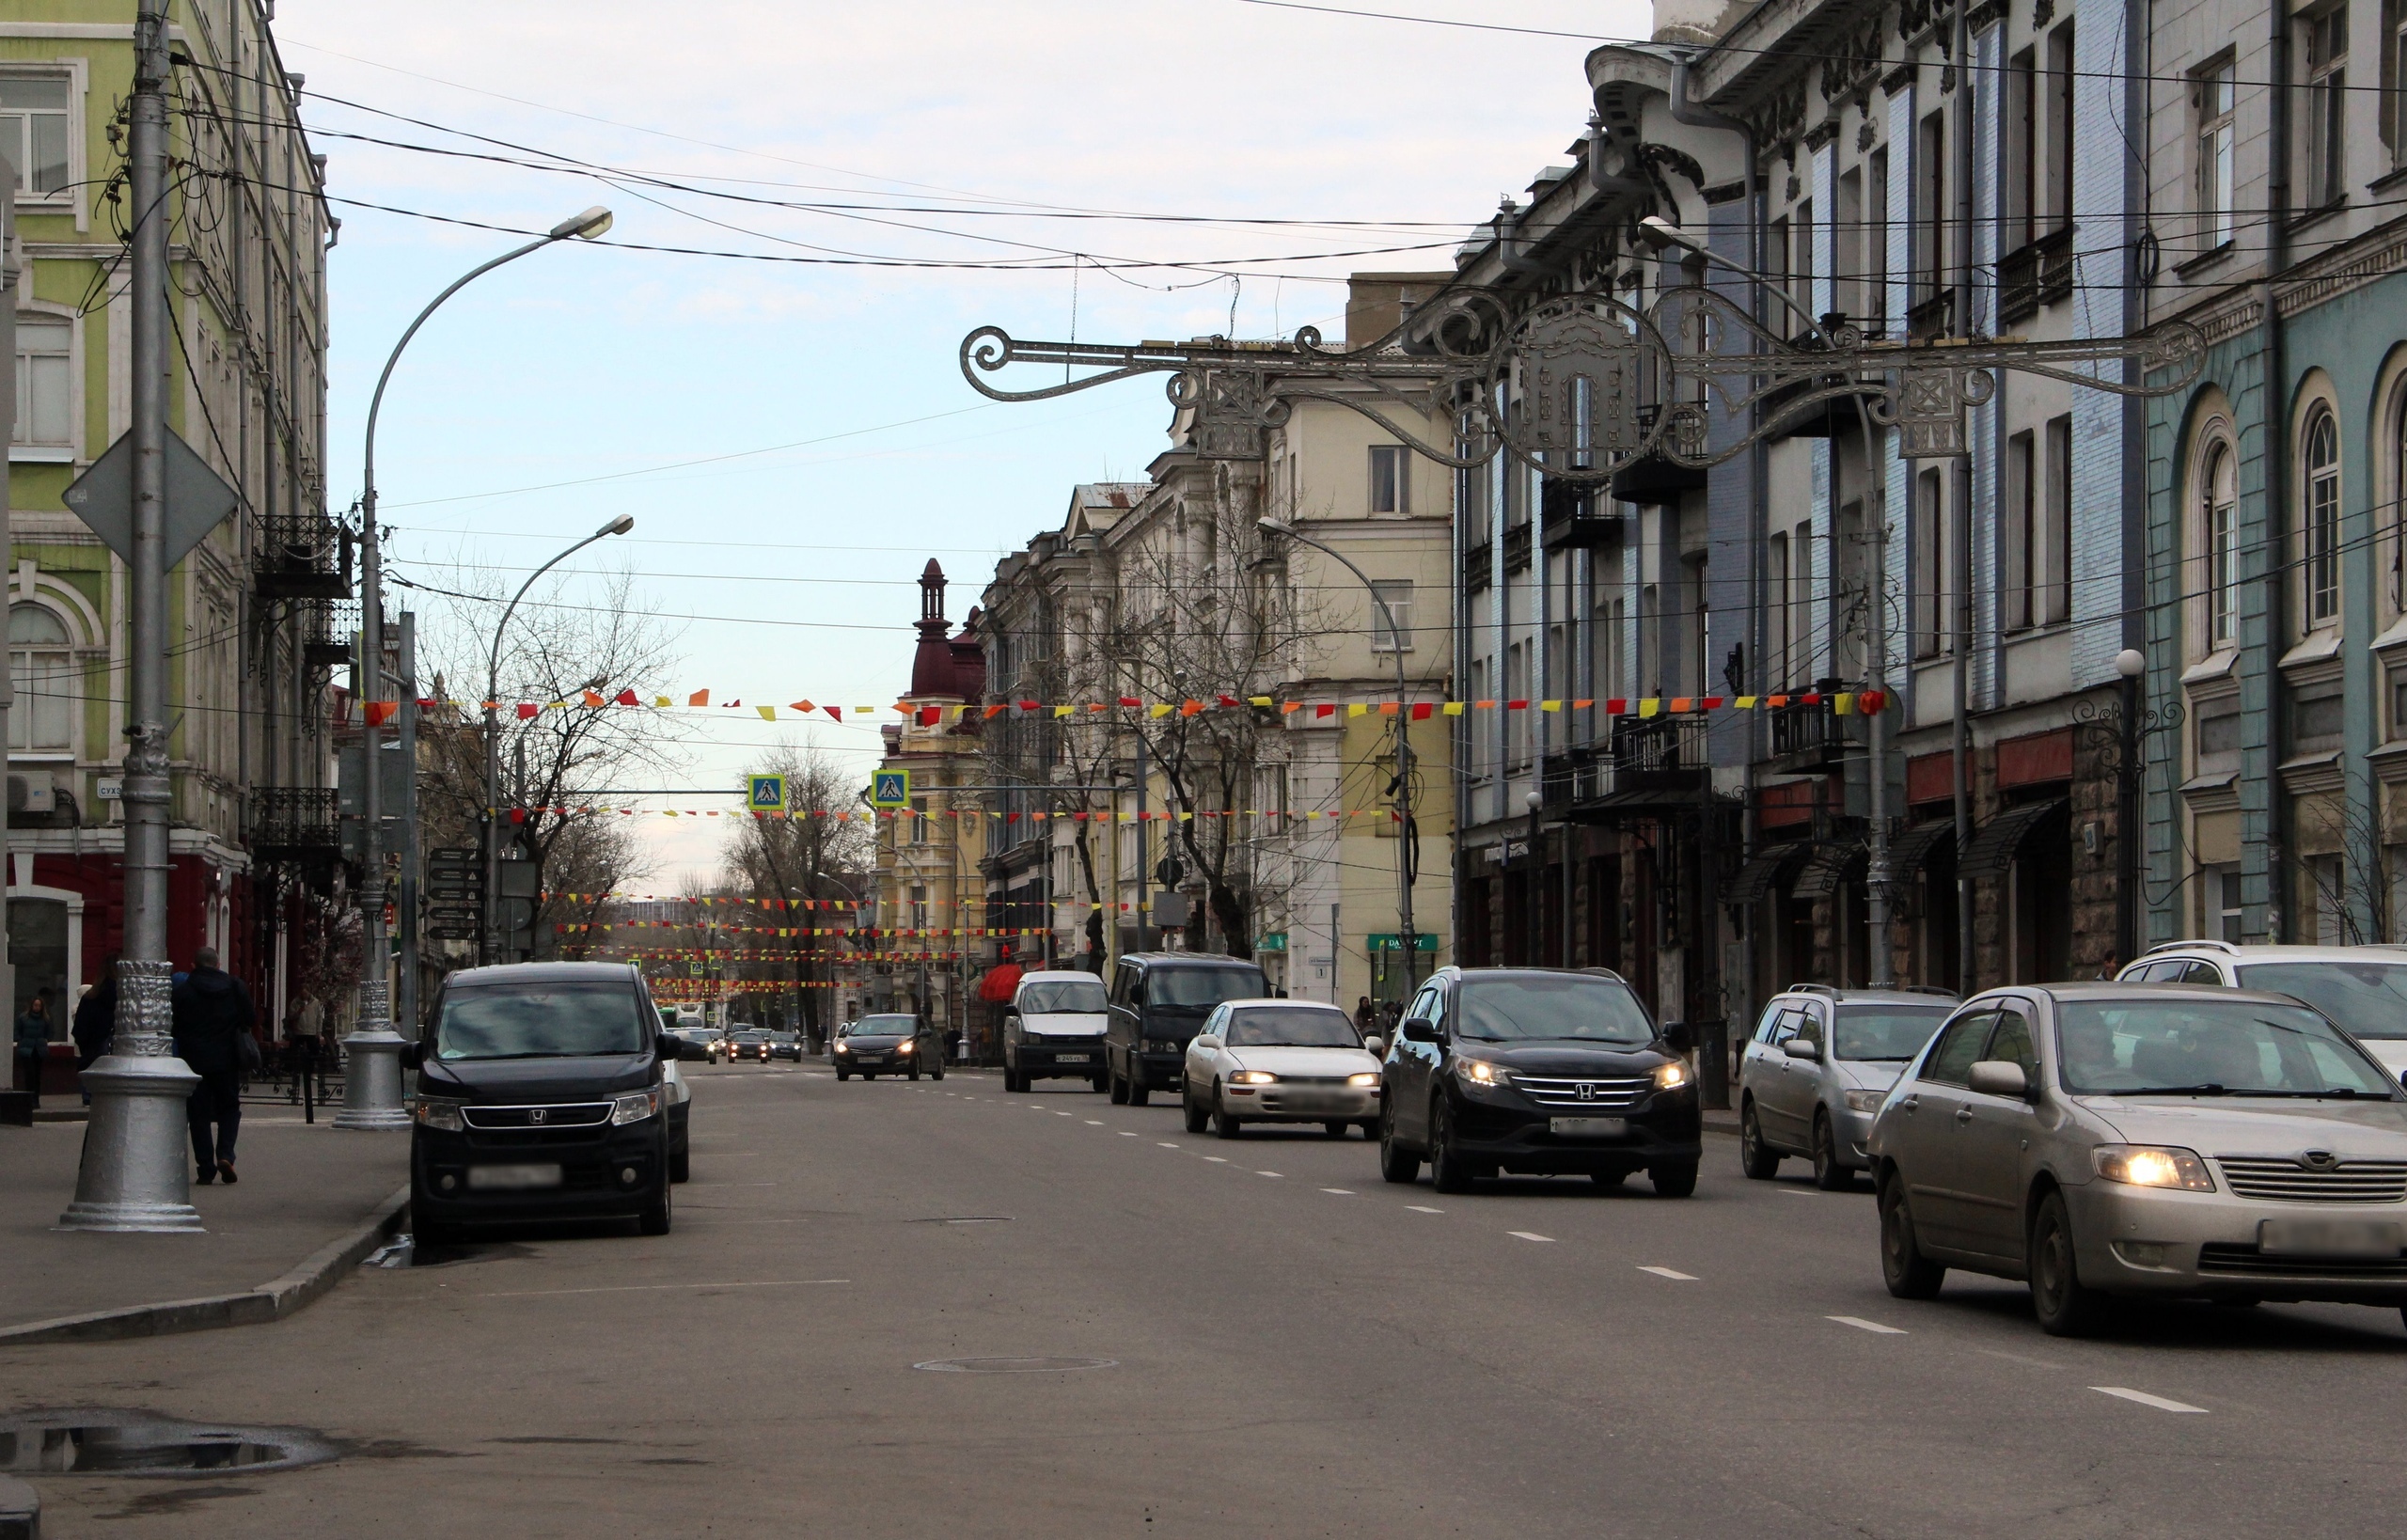 Участок улицы Карла Маркса в Иркутске благоустроят за 121 млн рублей